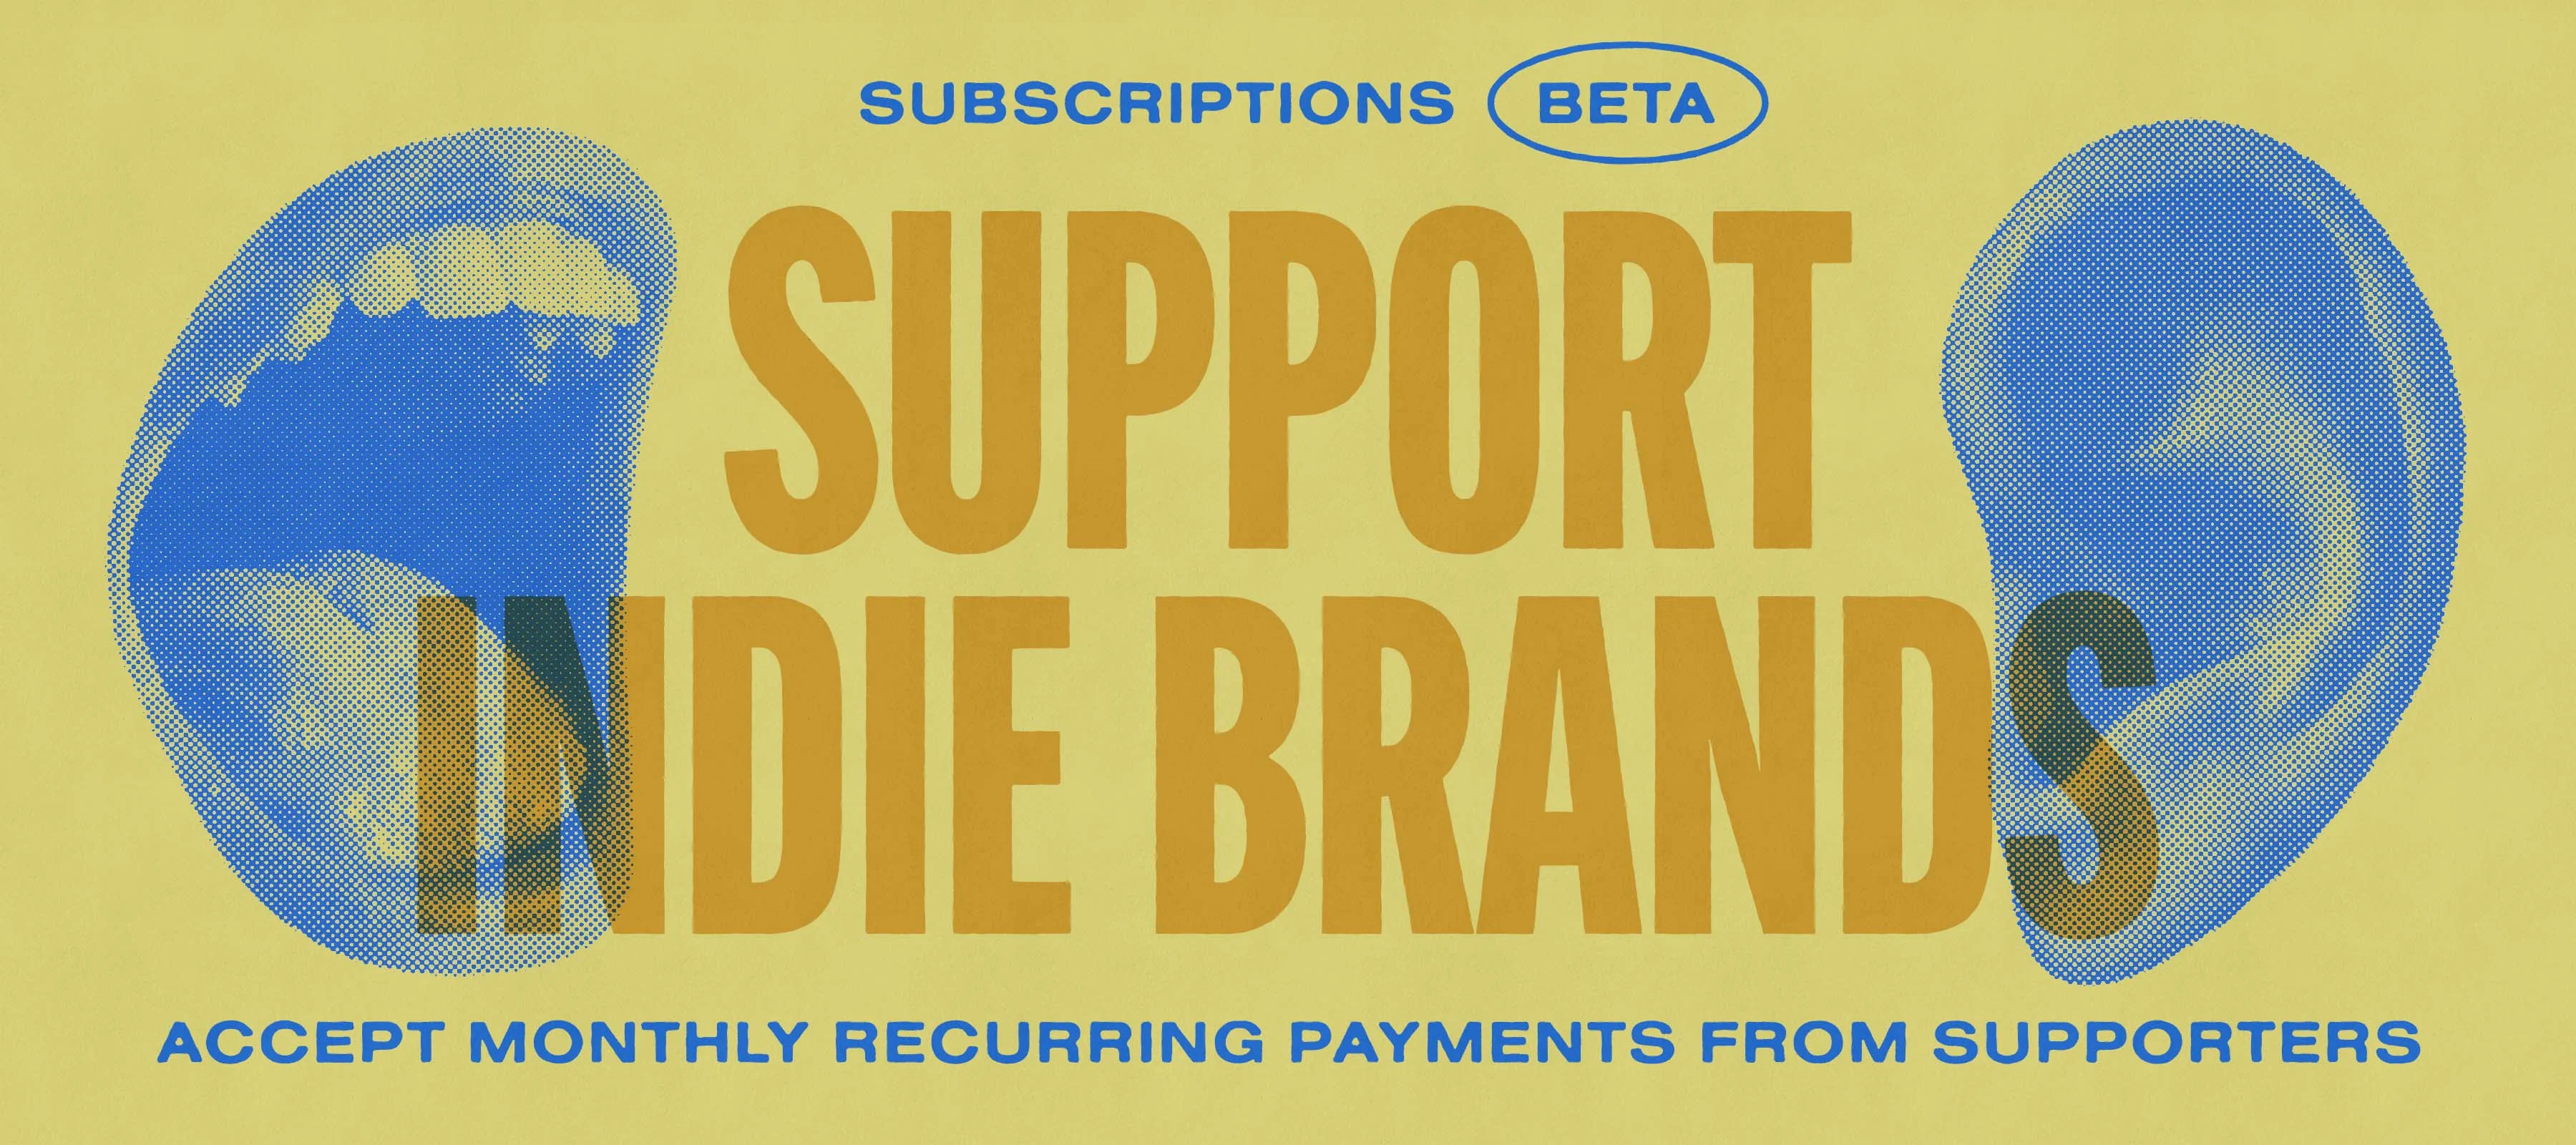 Introducing: Subscriptions Beta